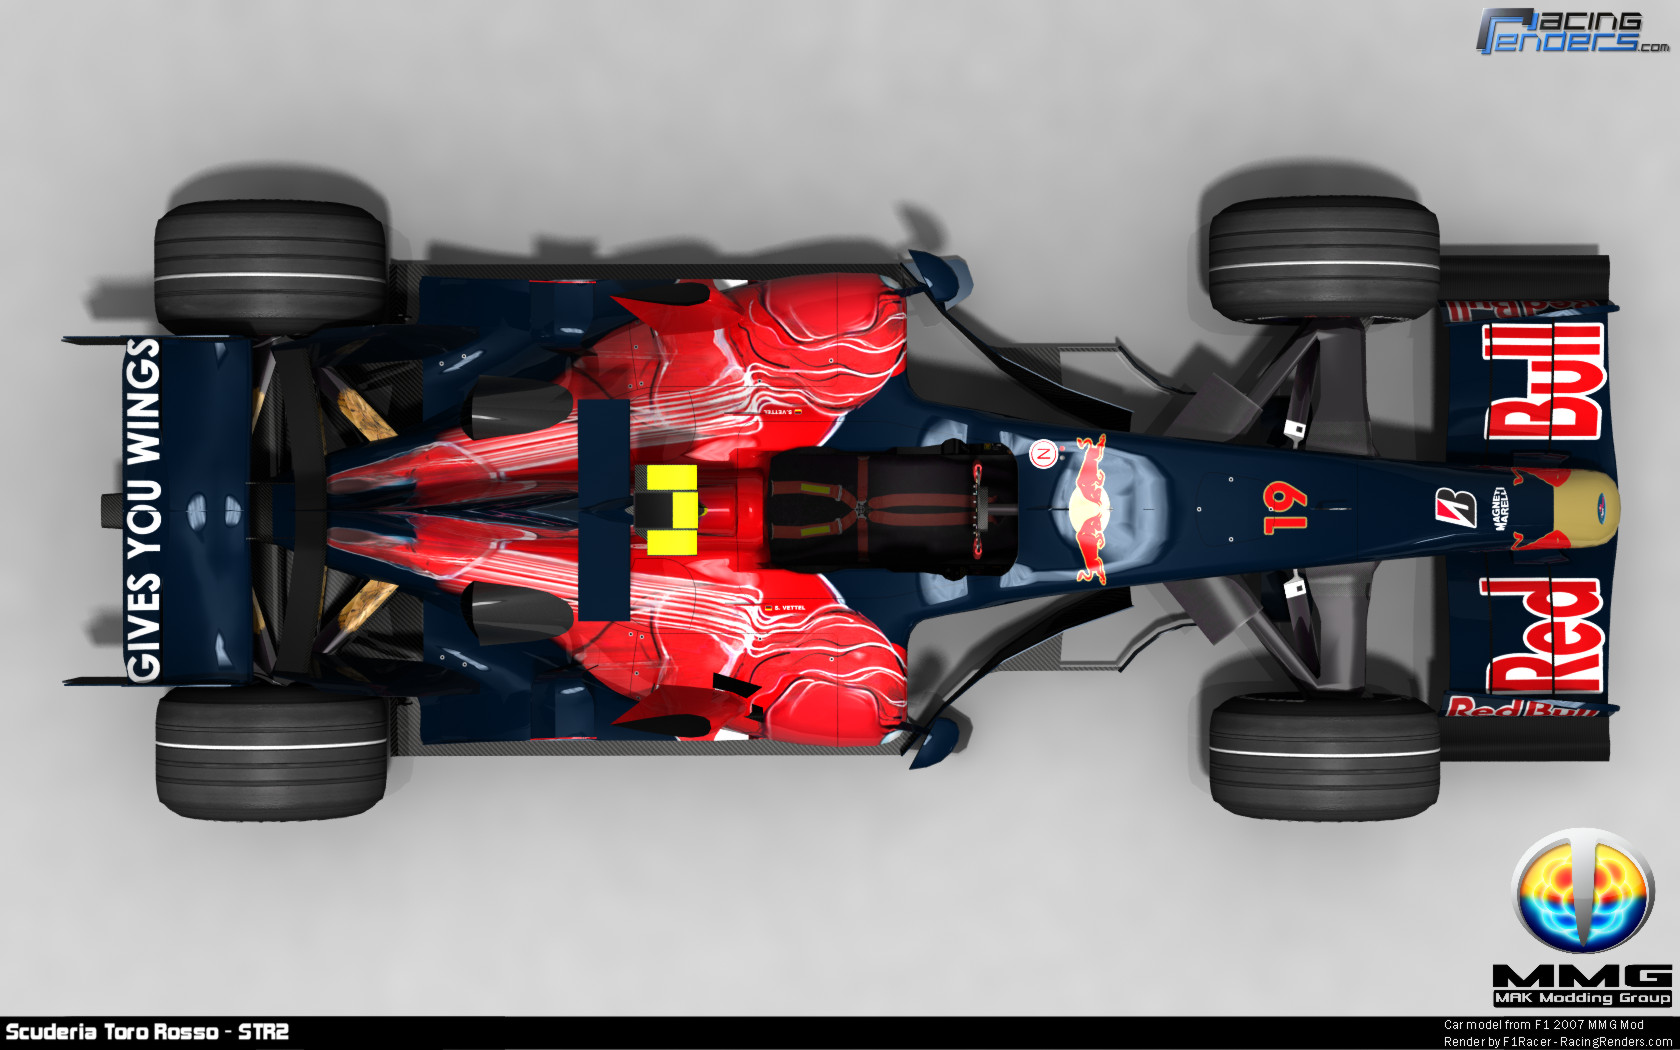 Racing Renders.com - 3D Automotive Art